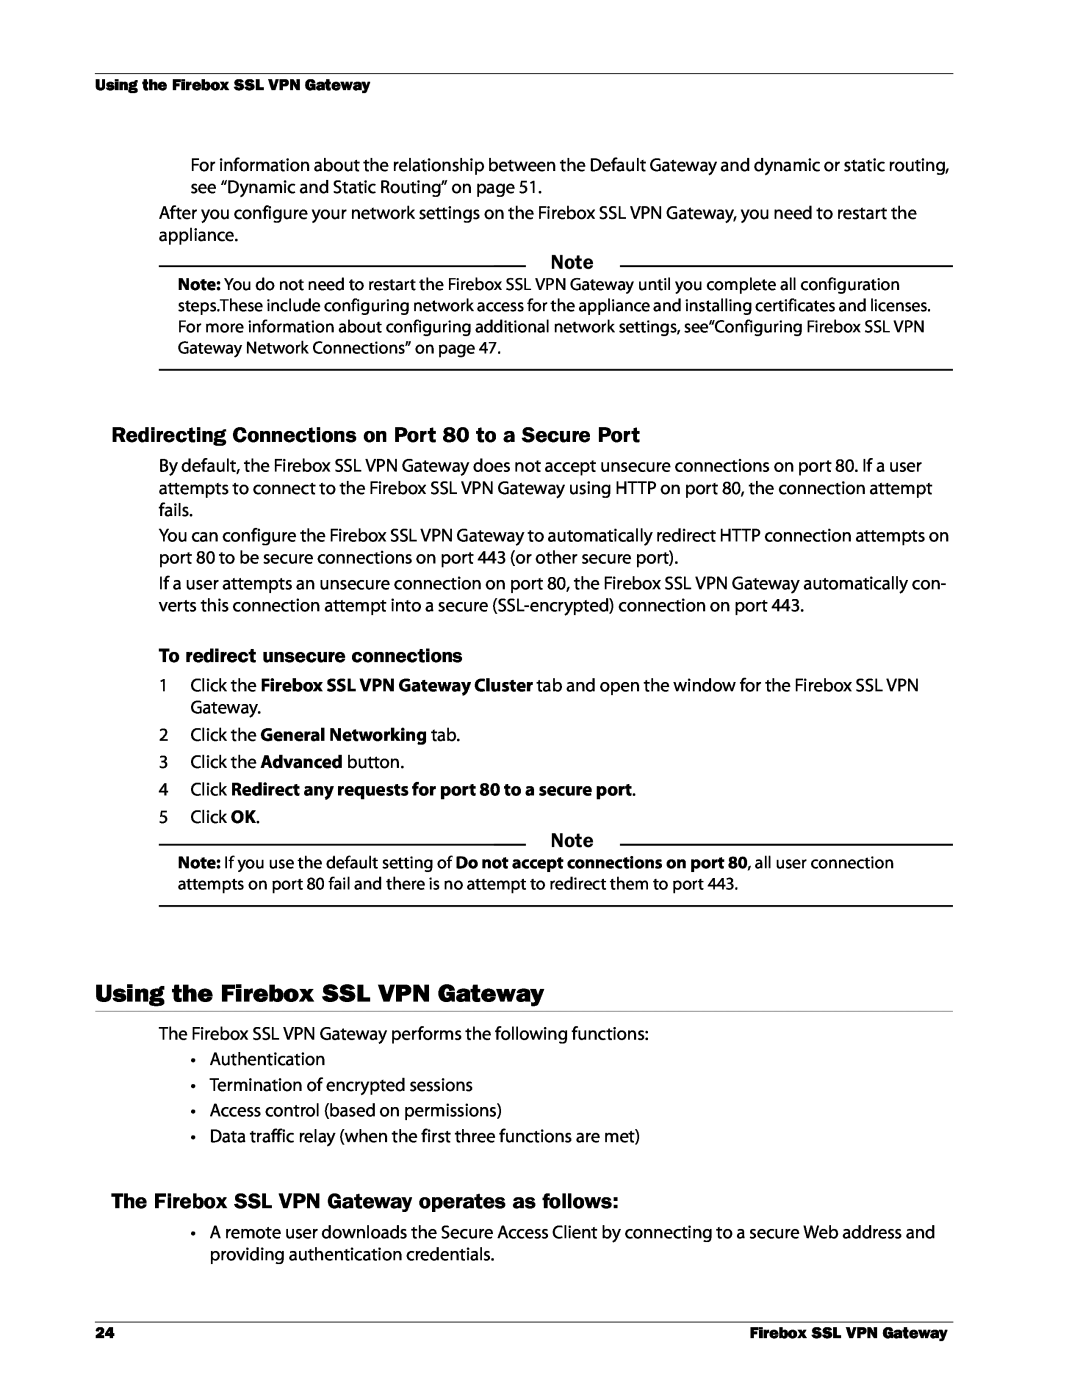 WatchGuard Technologies manual Using the Firebox SSL VPN Gateway, The Firebox SSL VPN Gateway operates as follows 